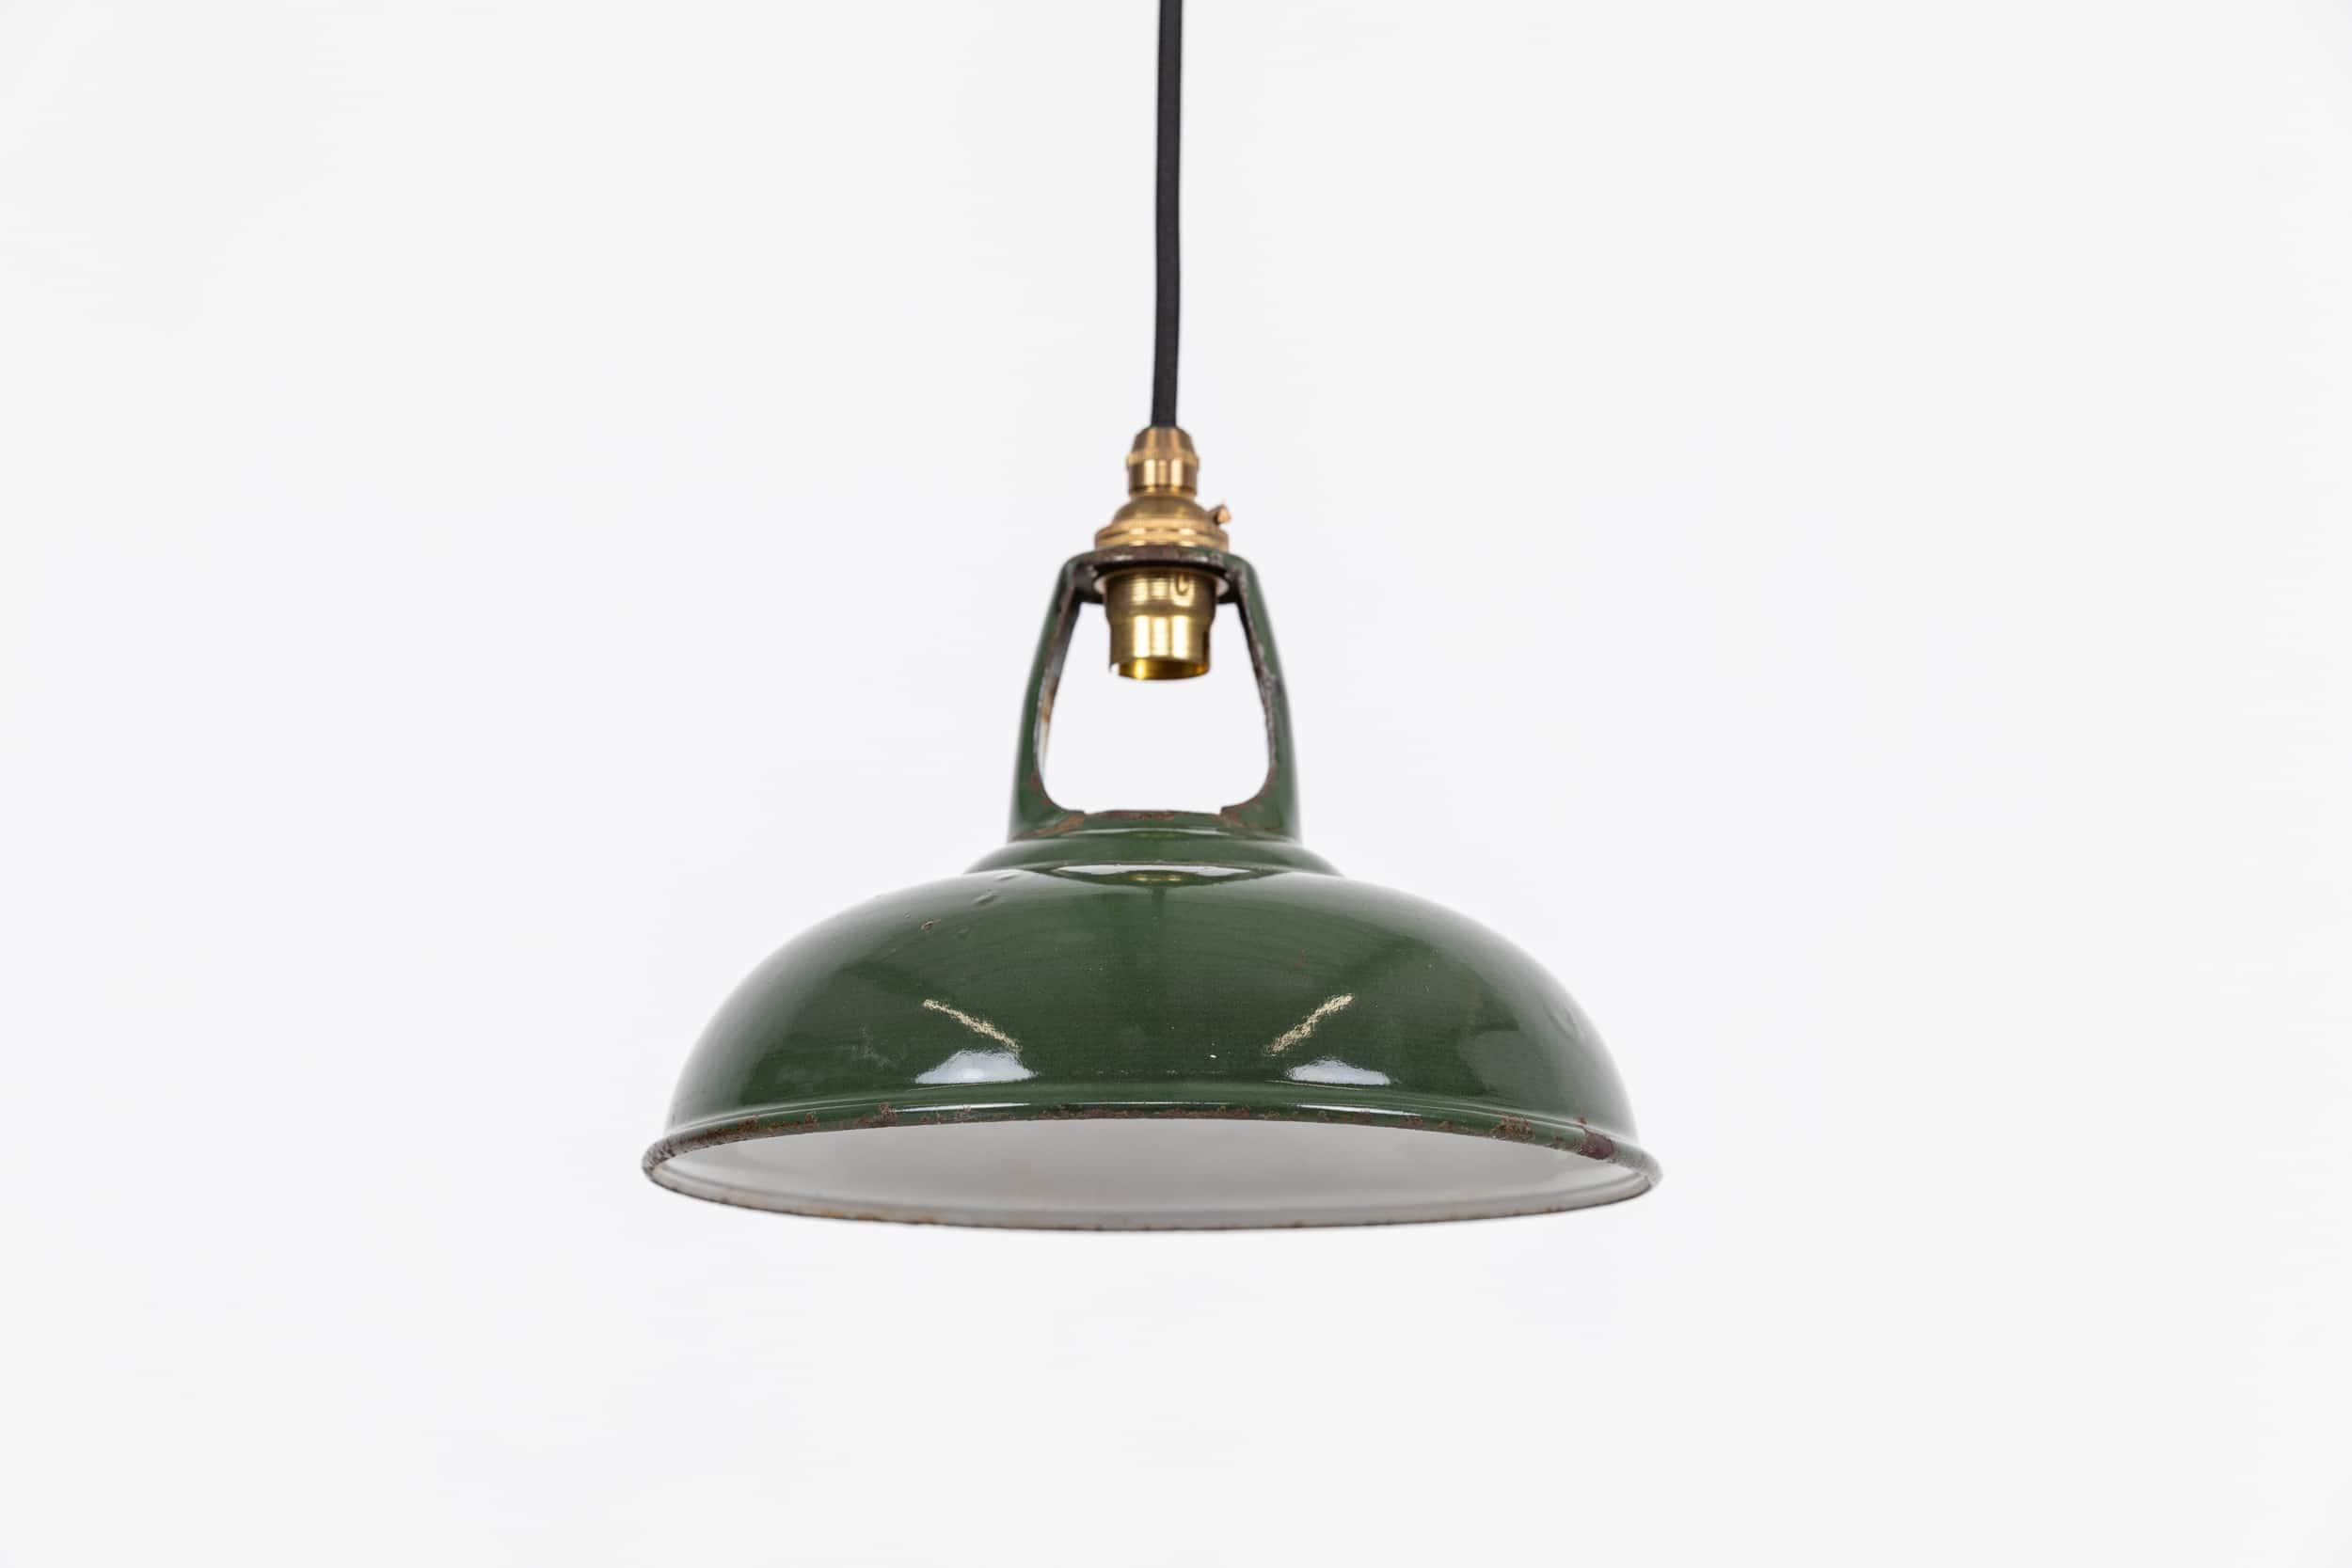 Pressed Vintage Industrial Coolicon Green Enamel Factory Pendant Light, C.1930